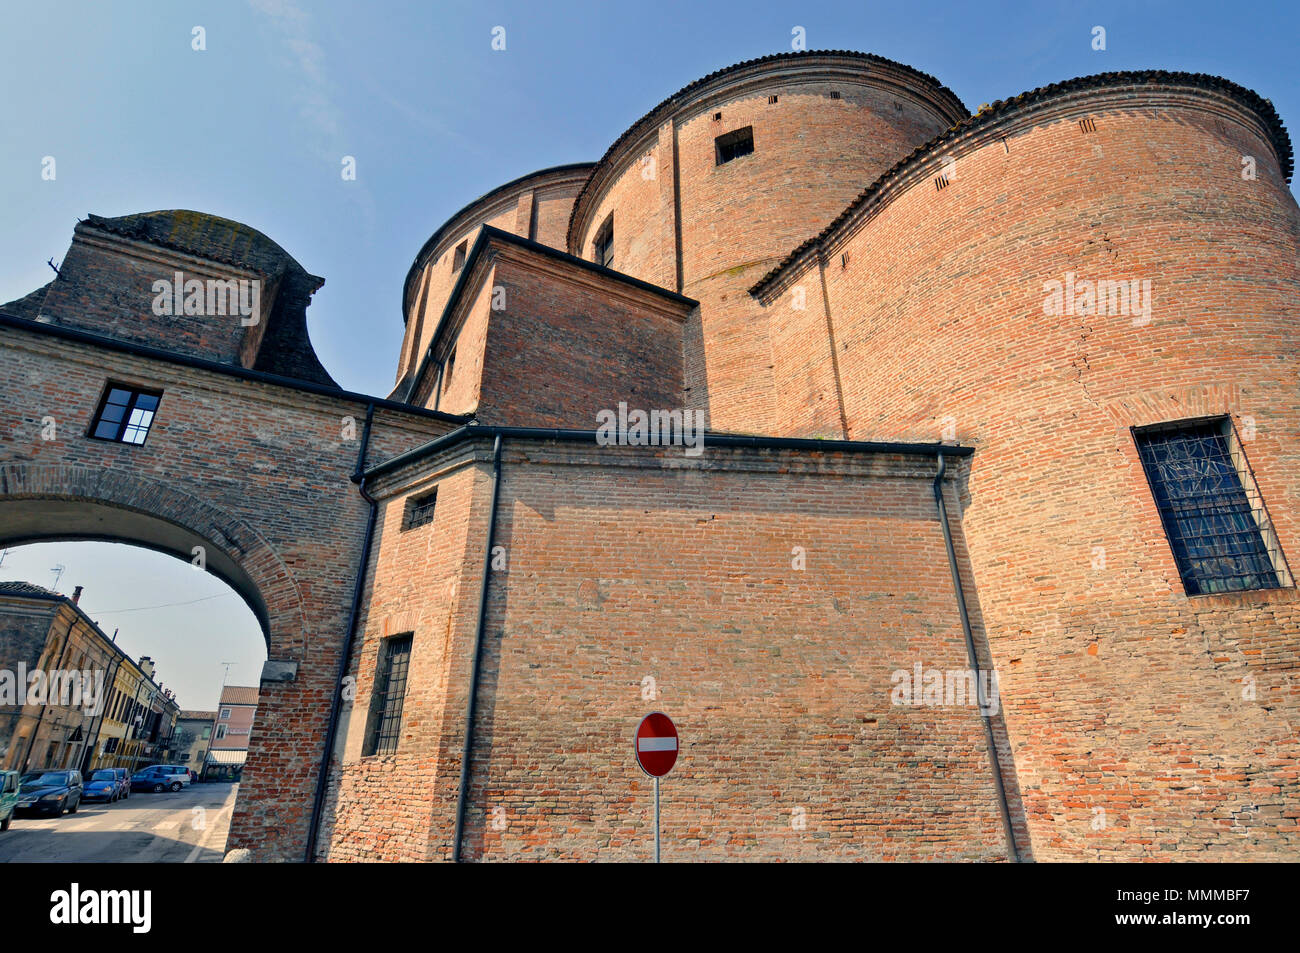 Back view of the Church of St. Anthony Martyr, Piazza Guglielmo Marconi, Ficarolo, Rovigo, Italy Stock Photo